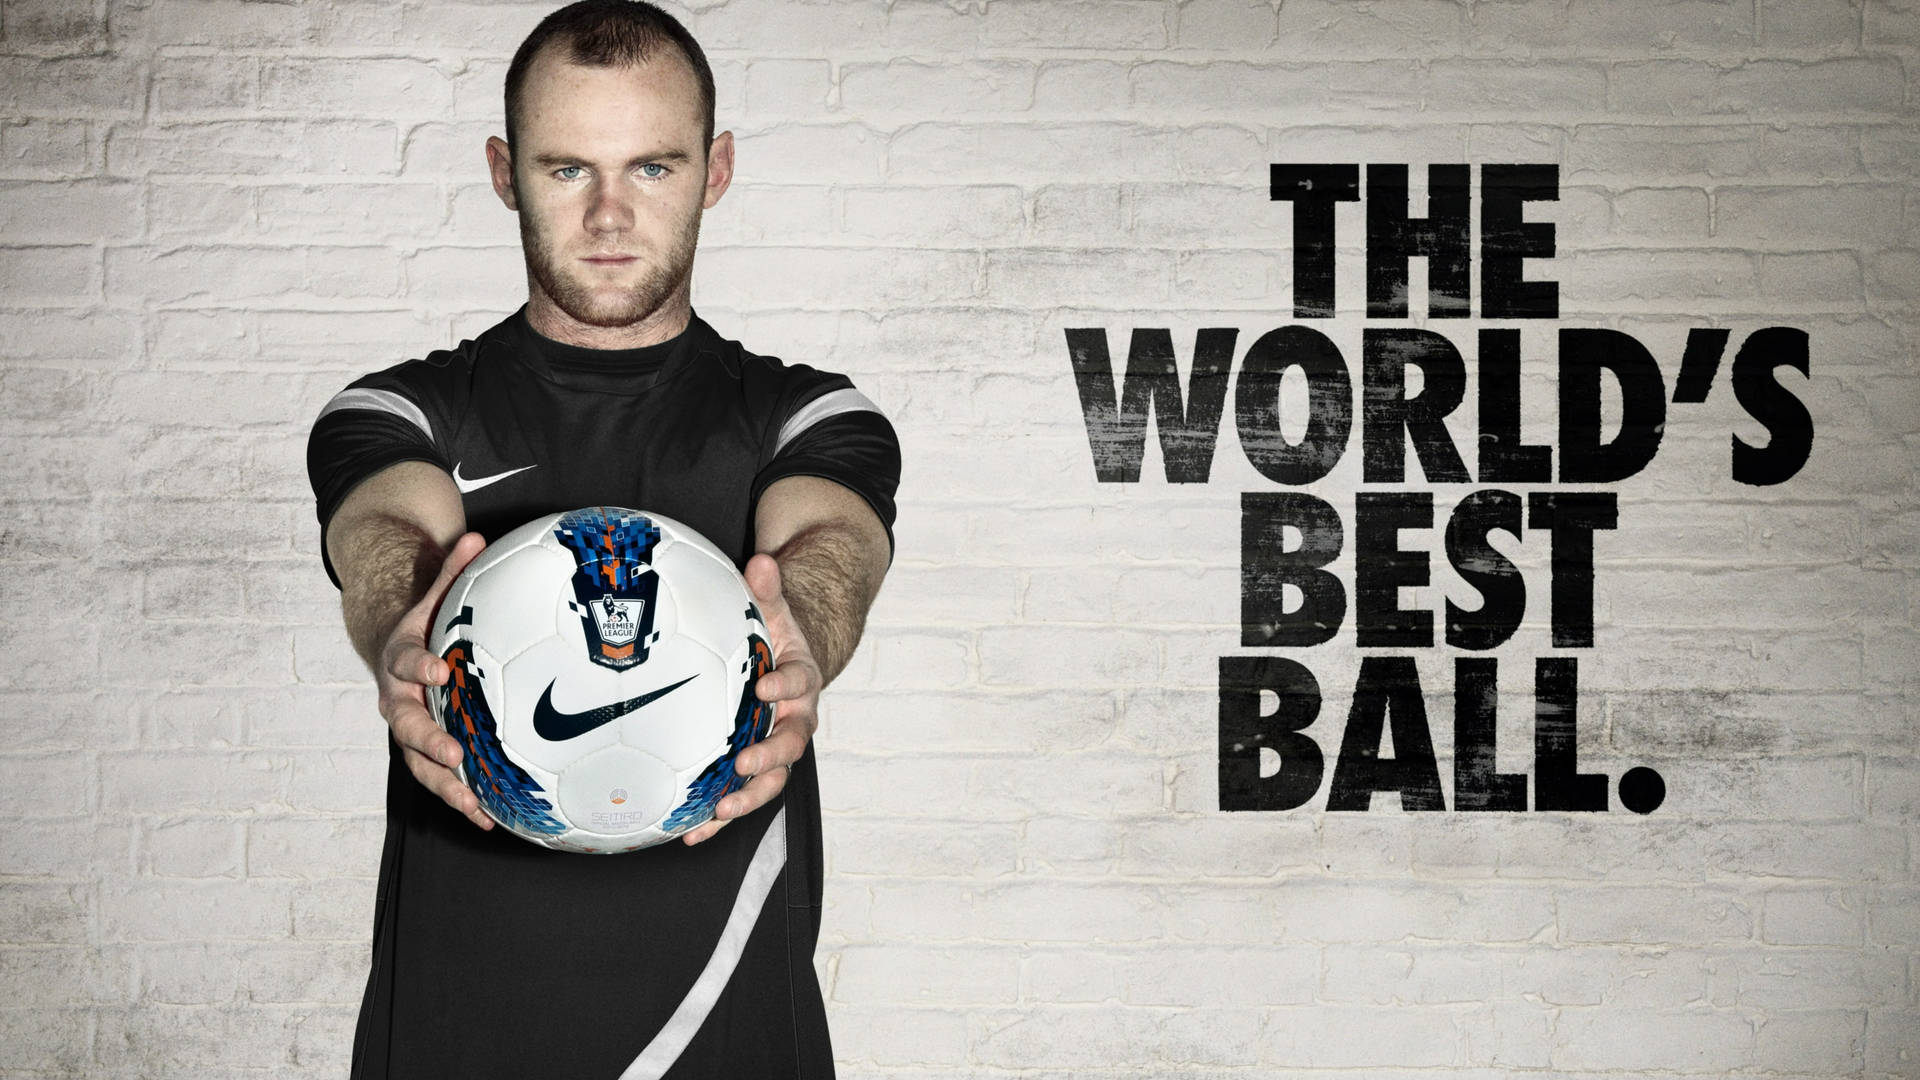 Wayne Rooney Nike Football Picture